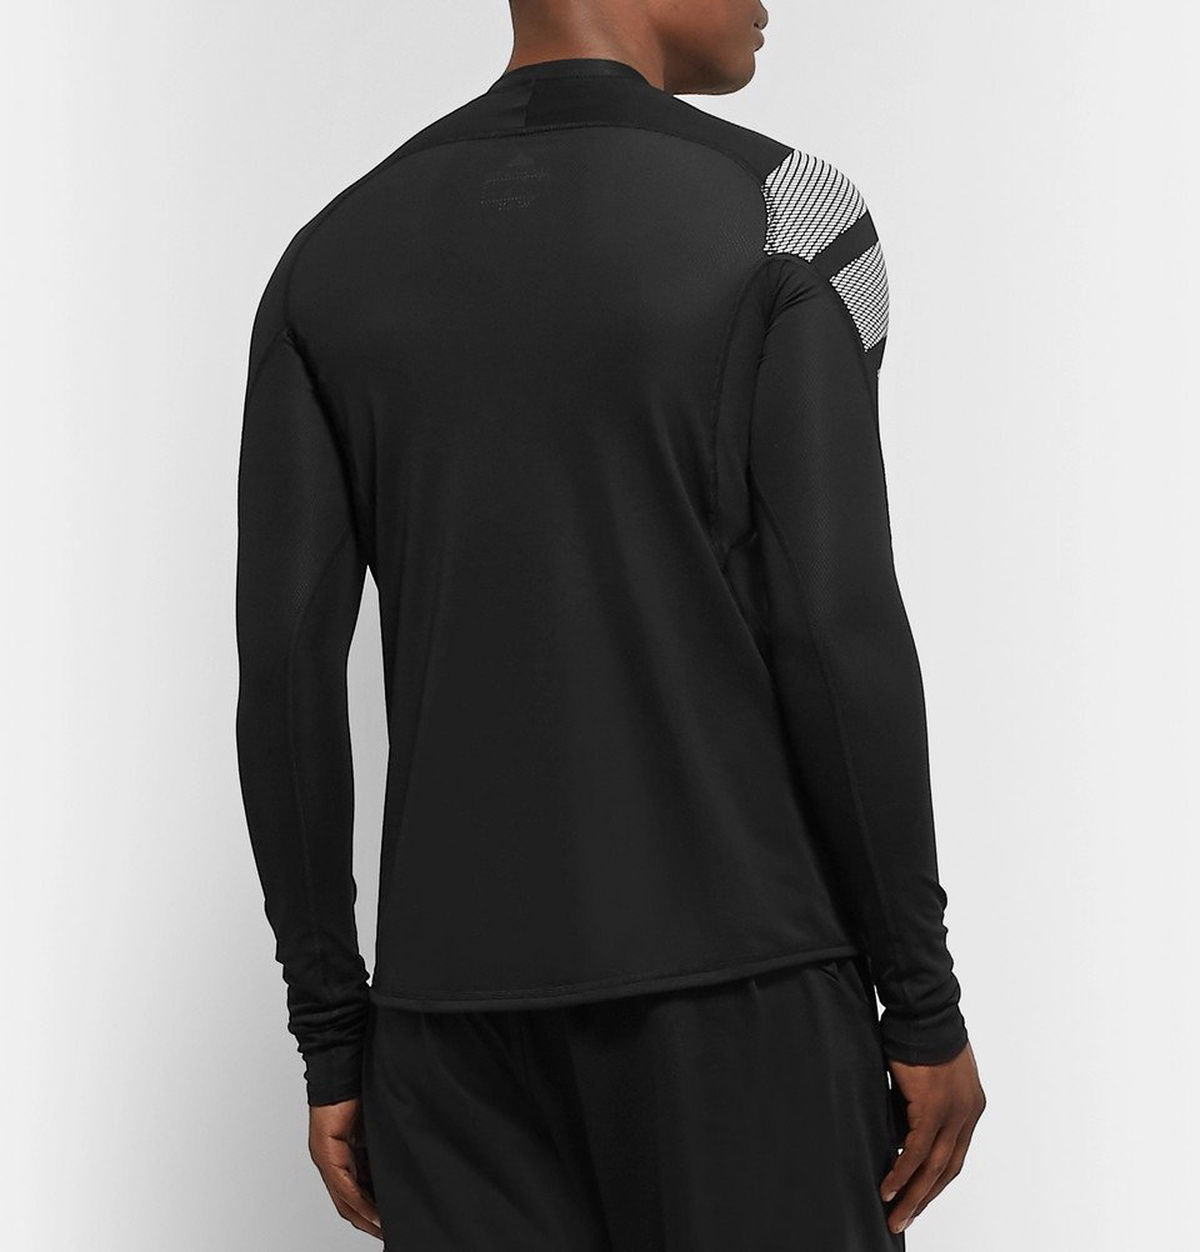 Adidas Sport - Alphaskin Badge of and Mesh Shirt - Black adidas